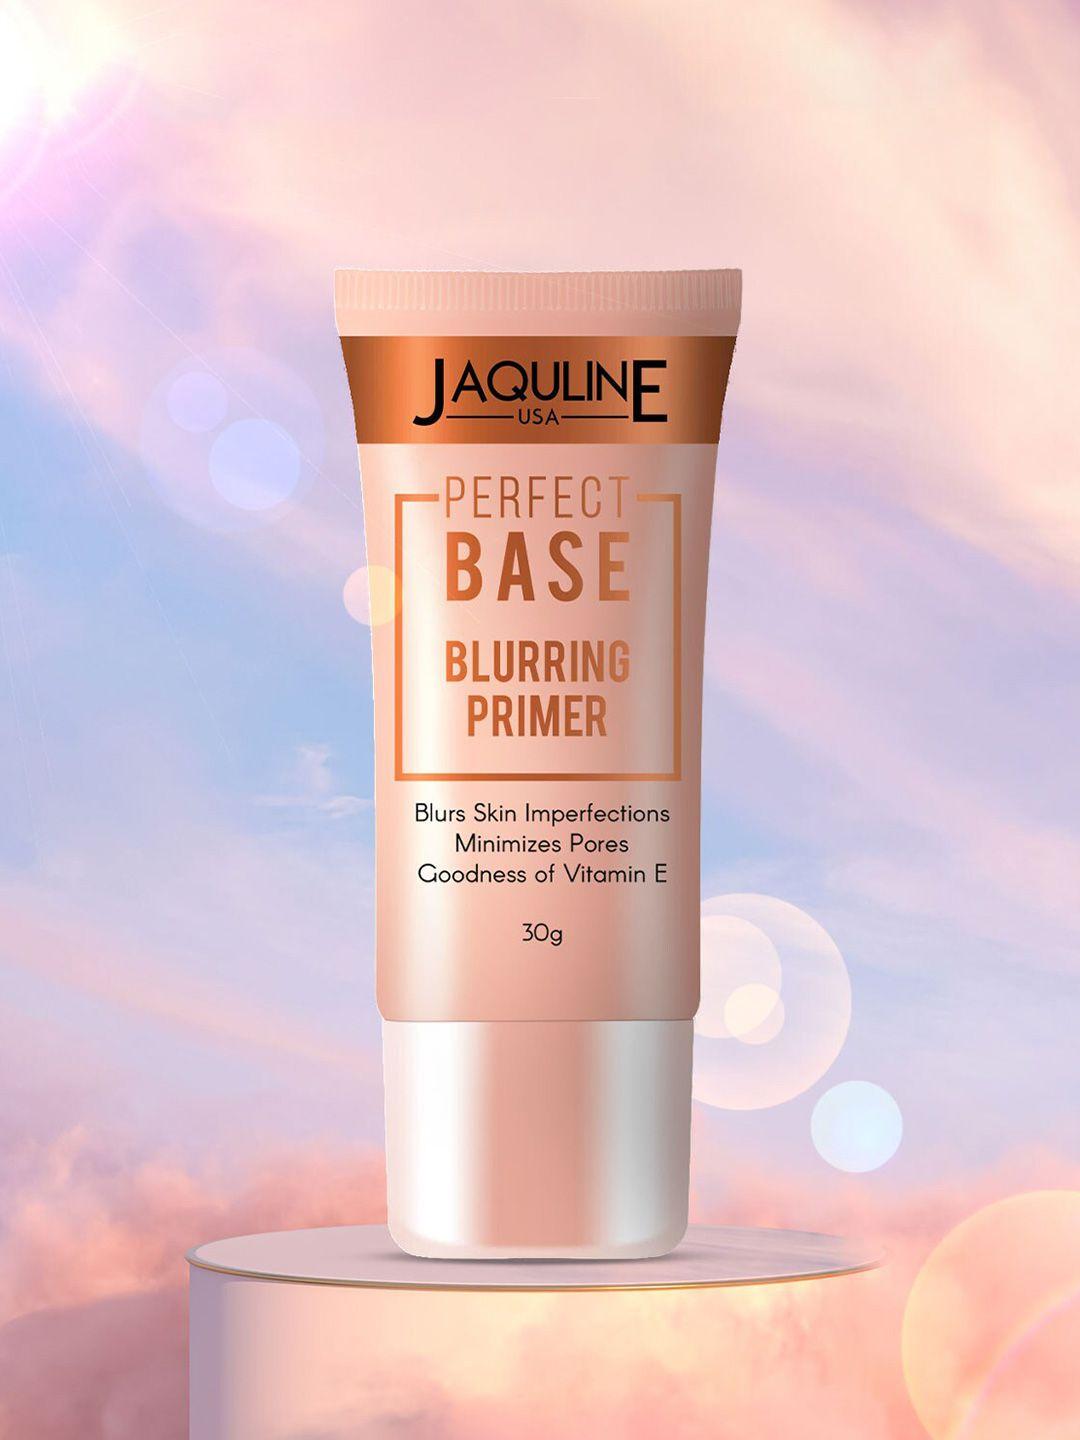 jaquline usa perfect base blurring primer - 30g